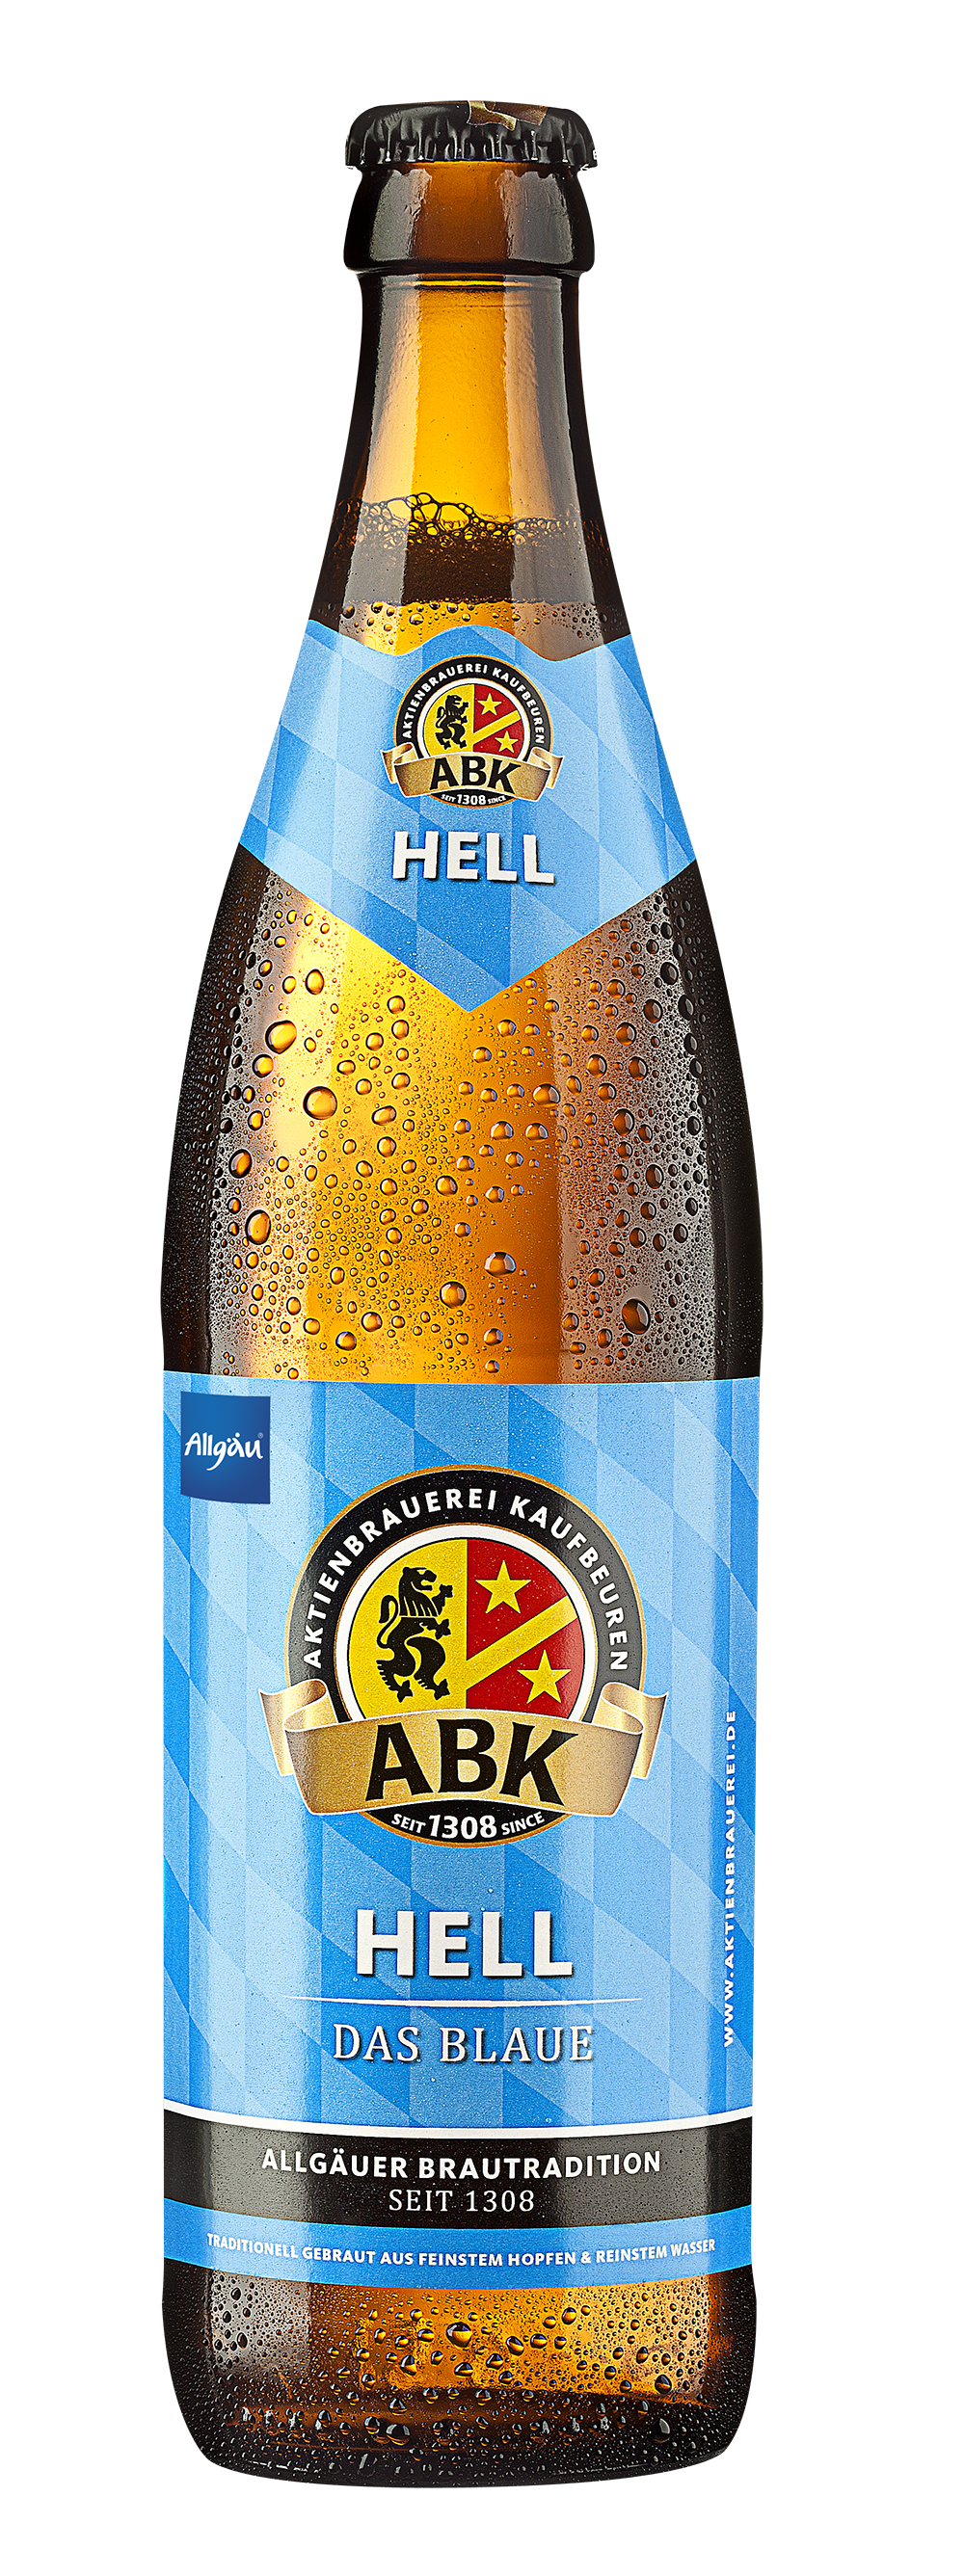 Hell пиво купить. Пиво ABK, Hell 0.5 л. АБК Хель пиво. ABK пивоварня. Пиво Hell немецкое.